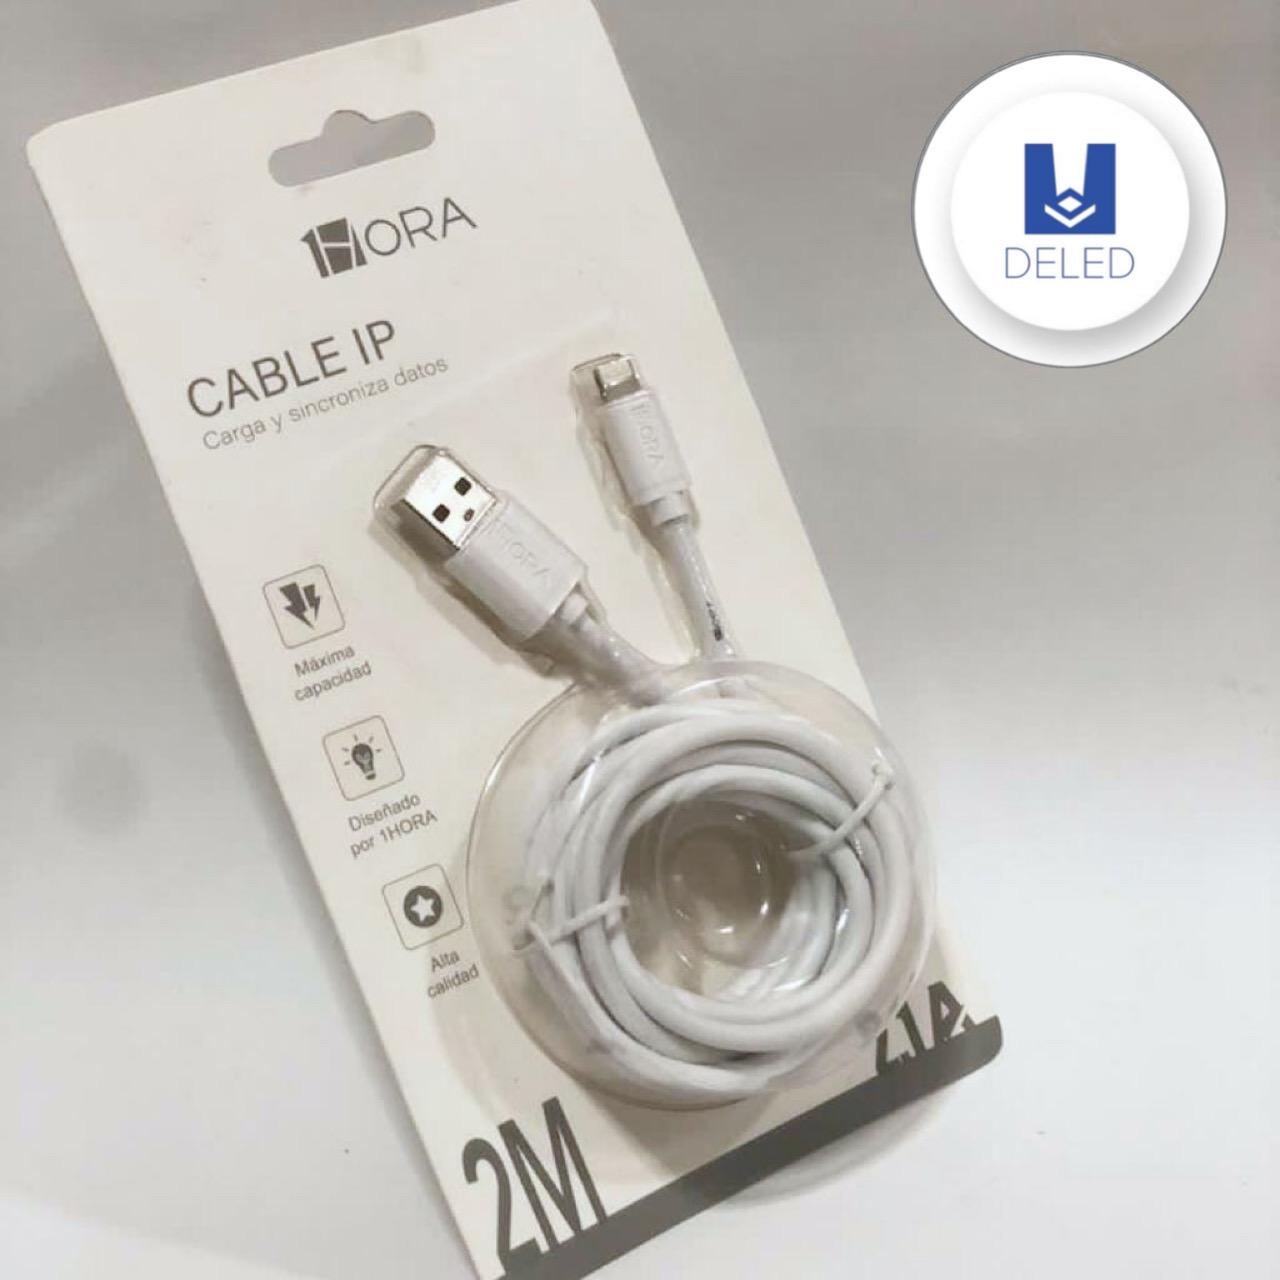 Cable Cargador USB Lightning para iPhone 2 Metros 2.1A Calidad Original 1HORA CAB206